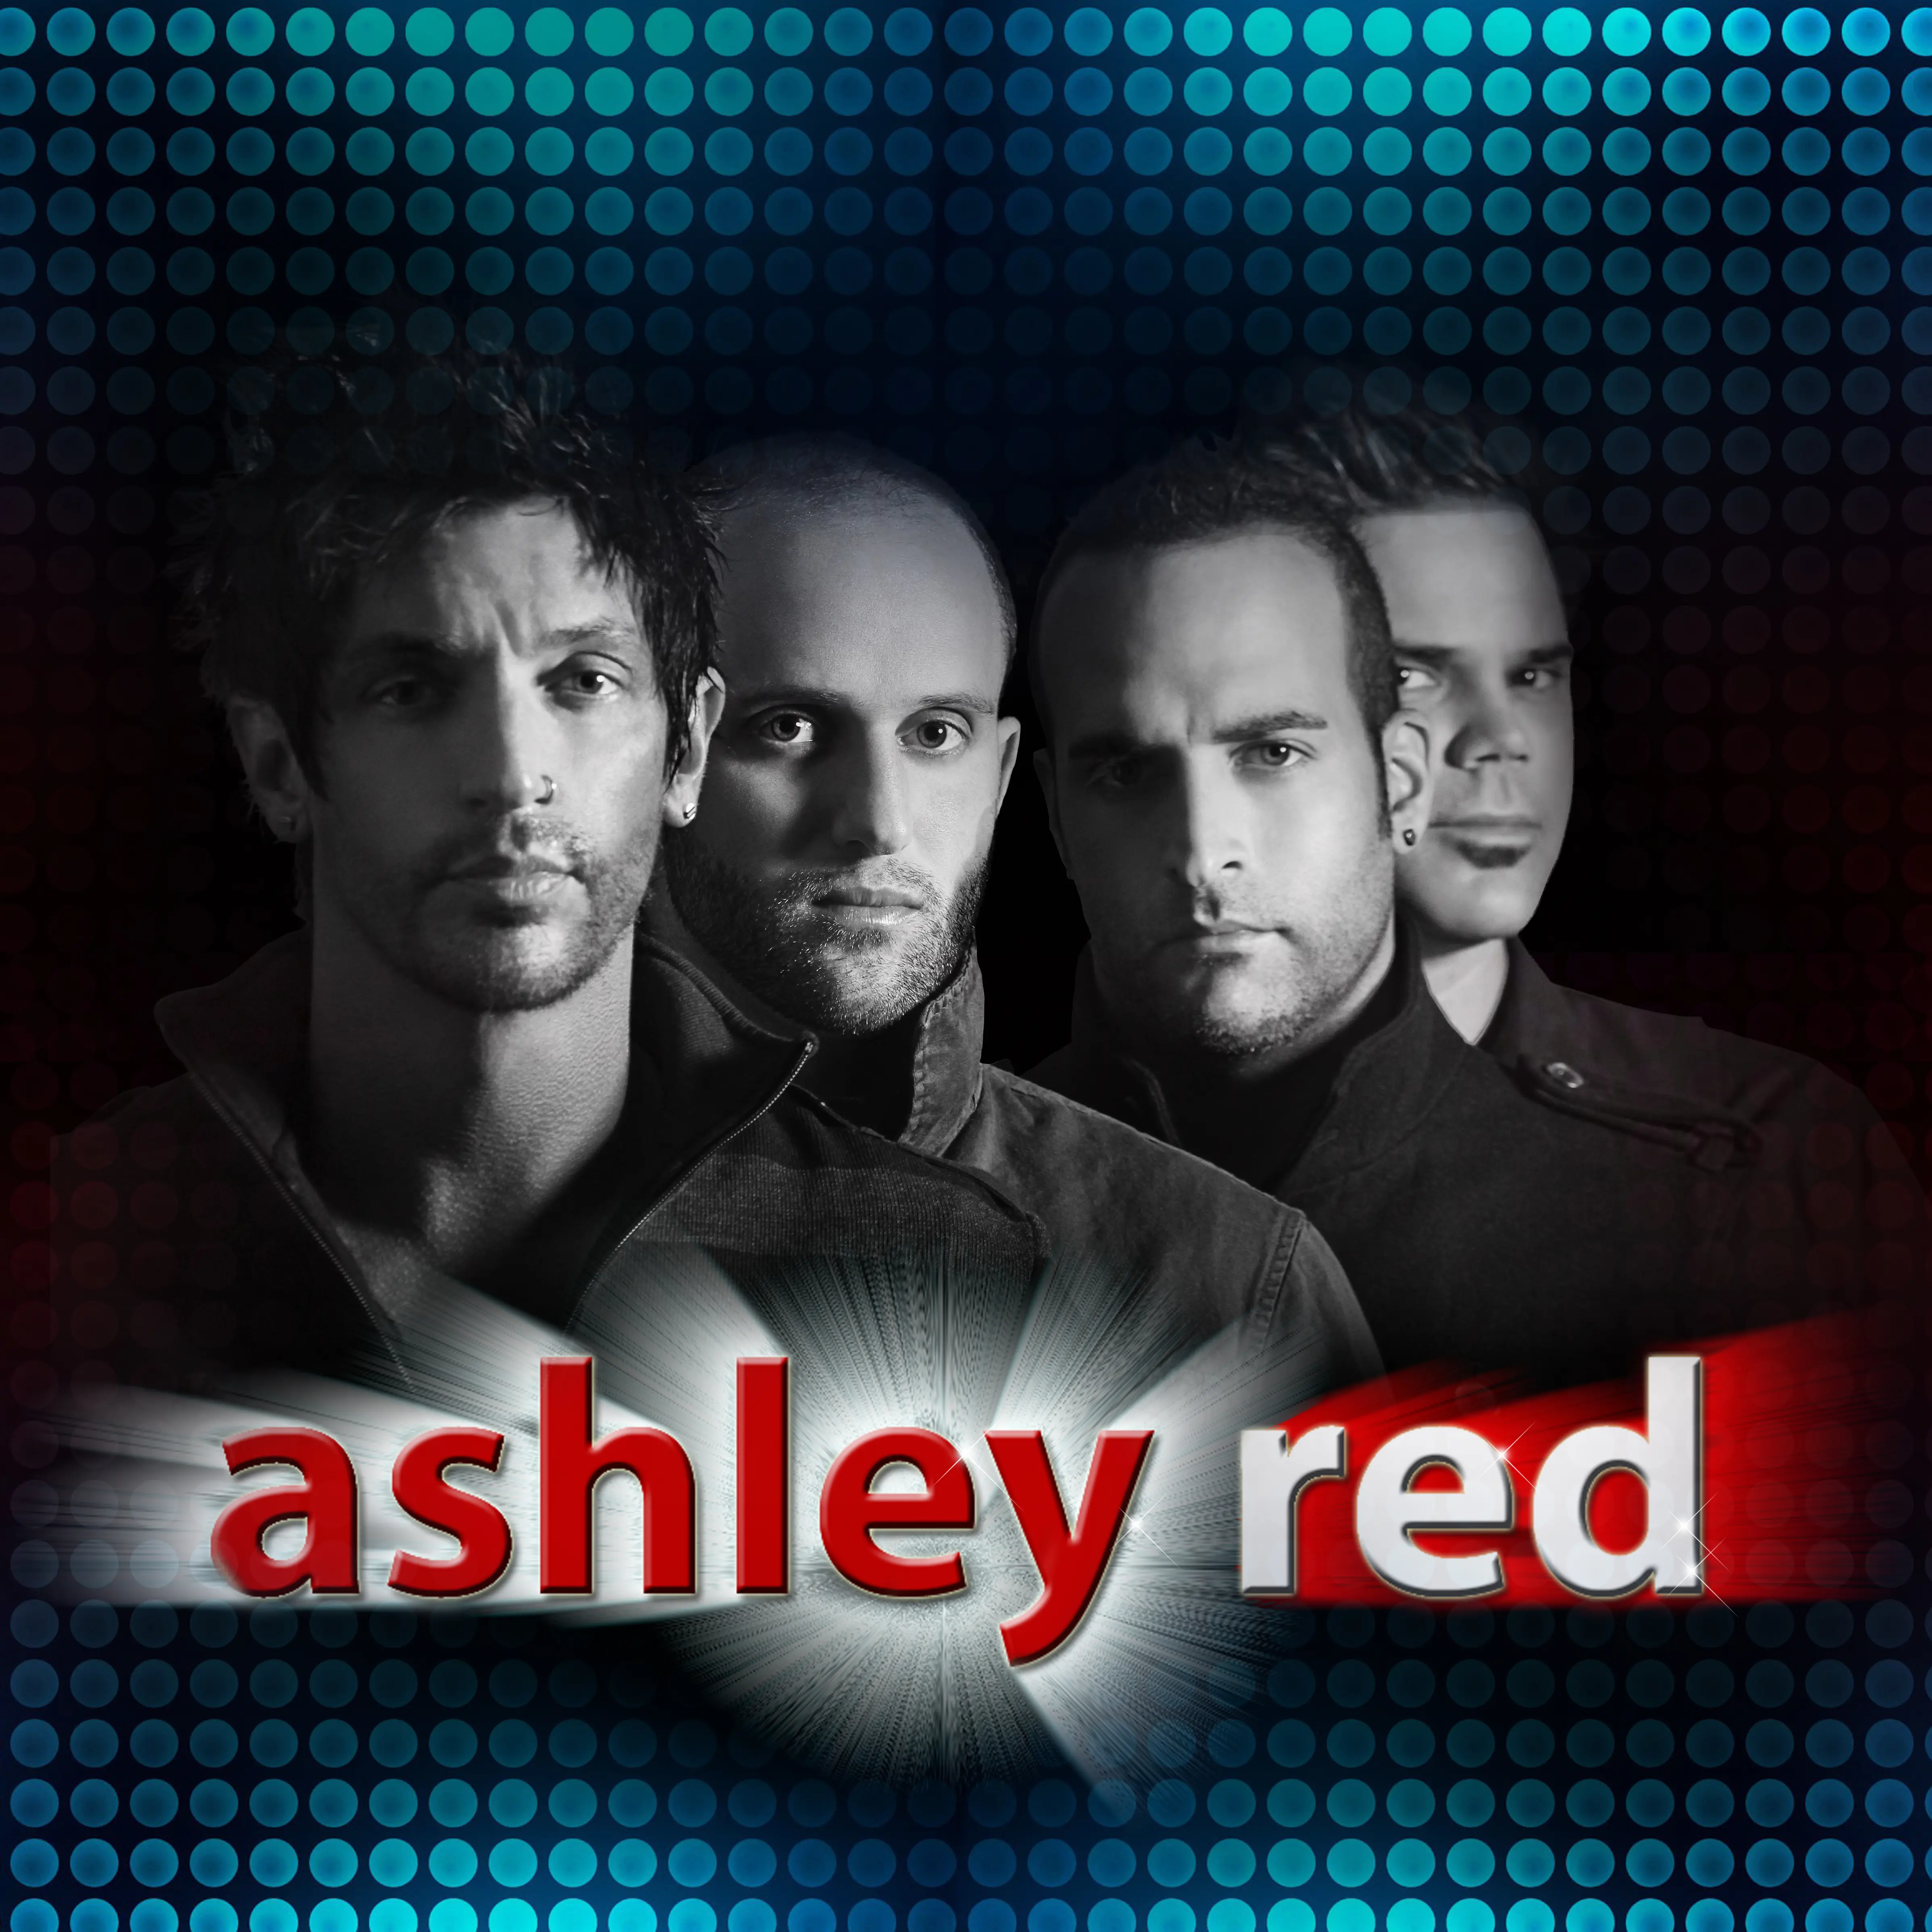 Ashley Red